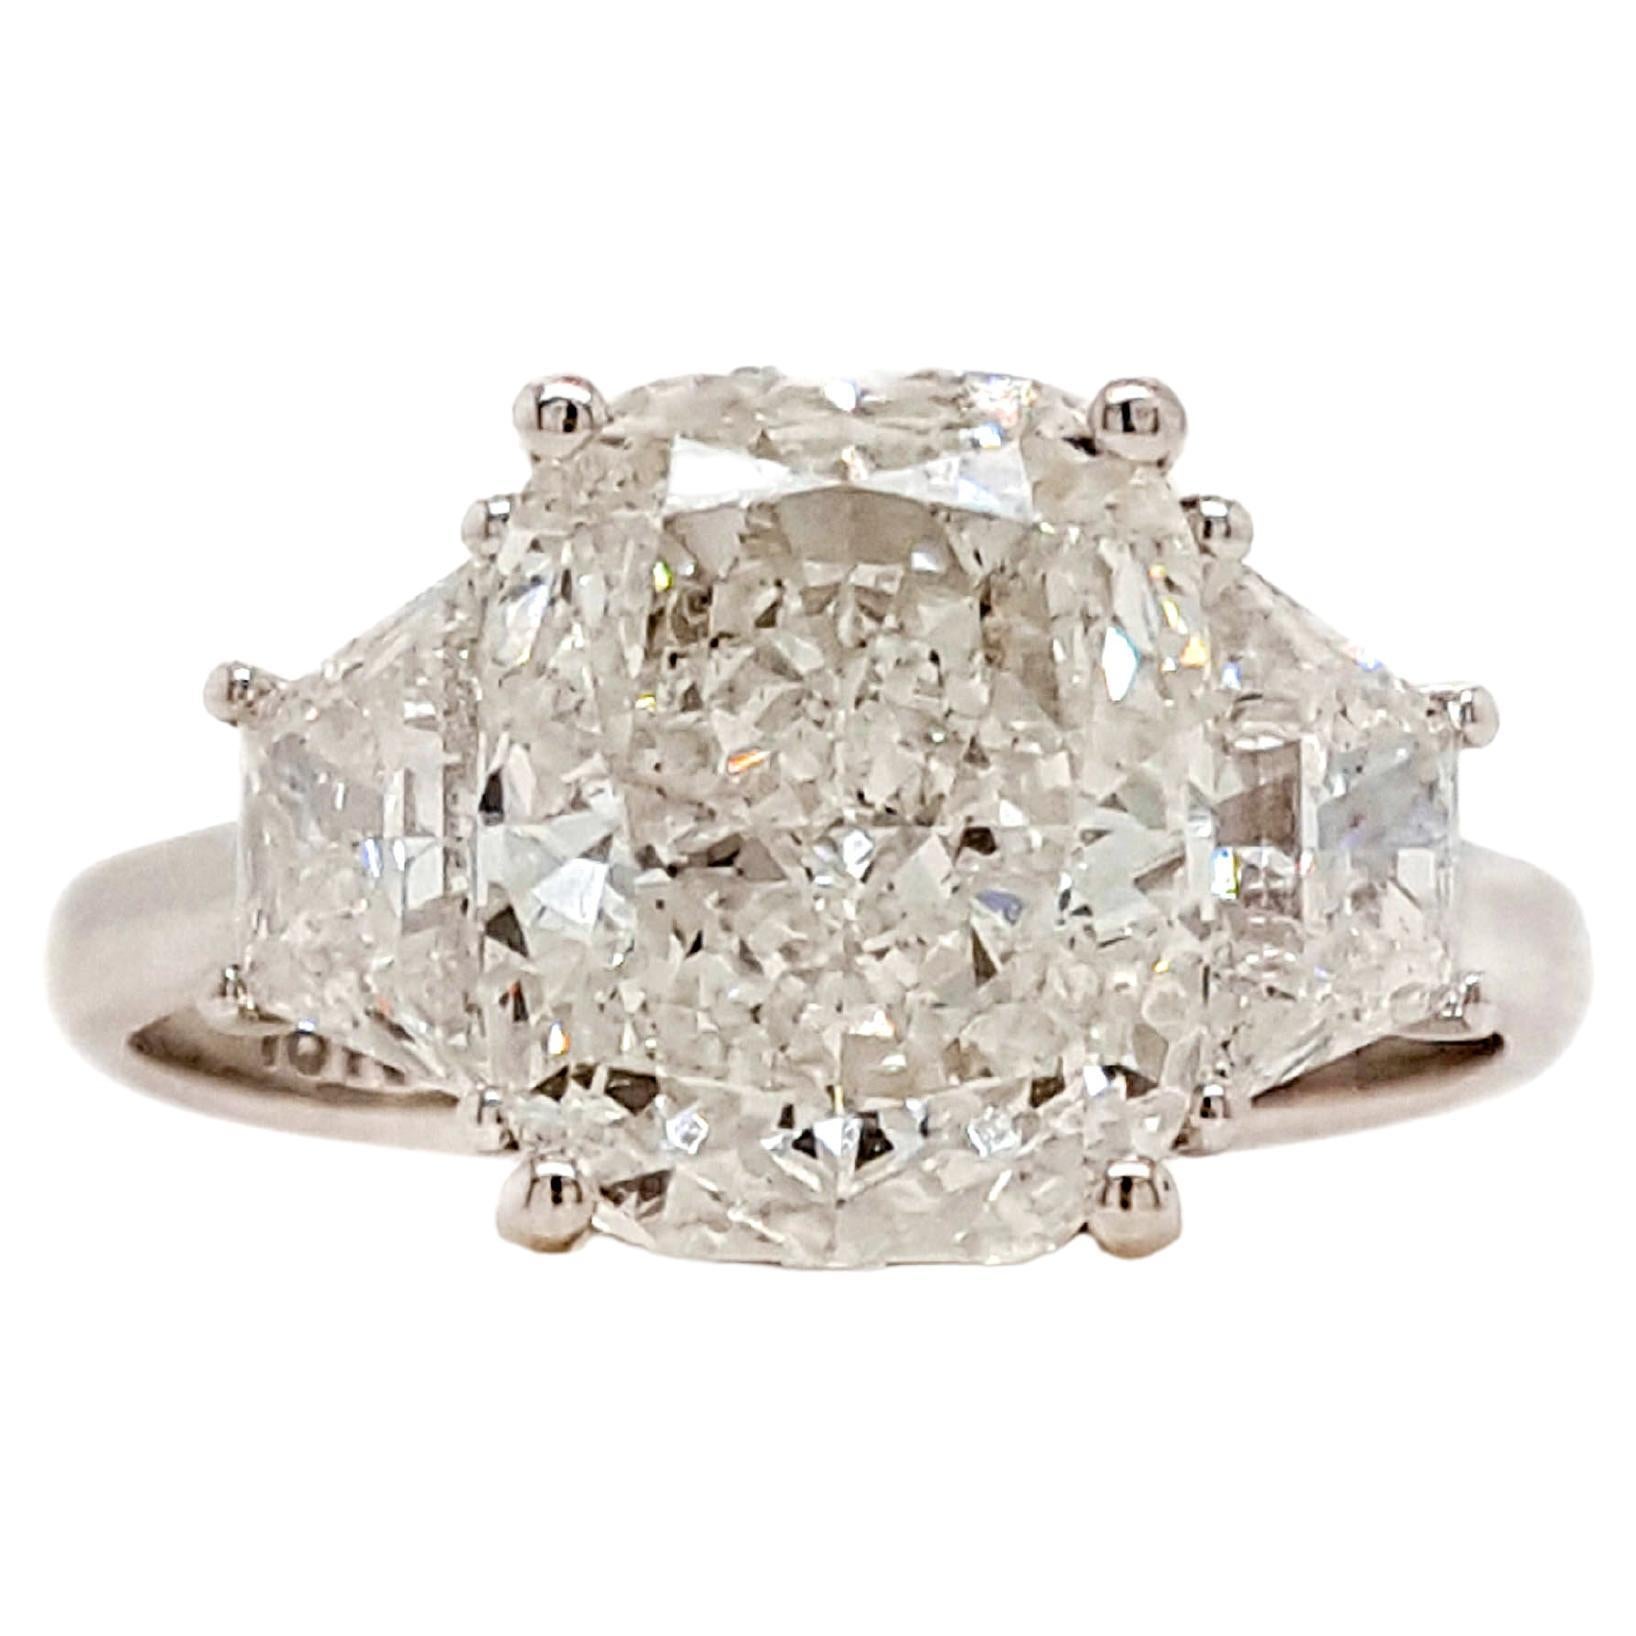 3.50 Carat Cushion Cut Diamond Three-Stone Engagement Ring, 18K Gold, GIA Report